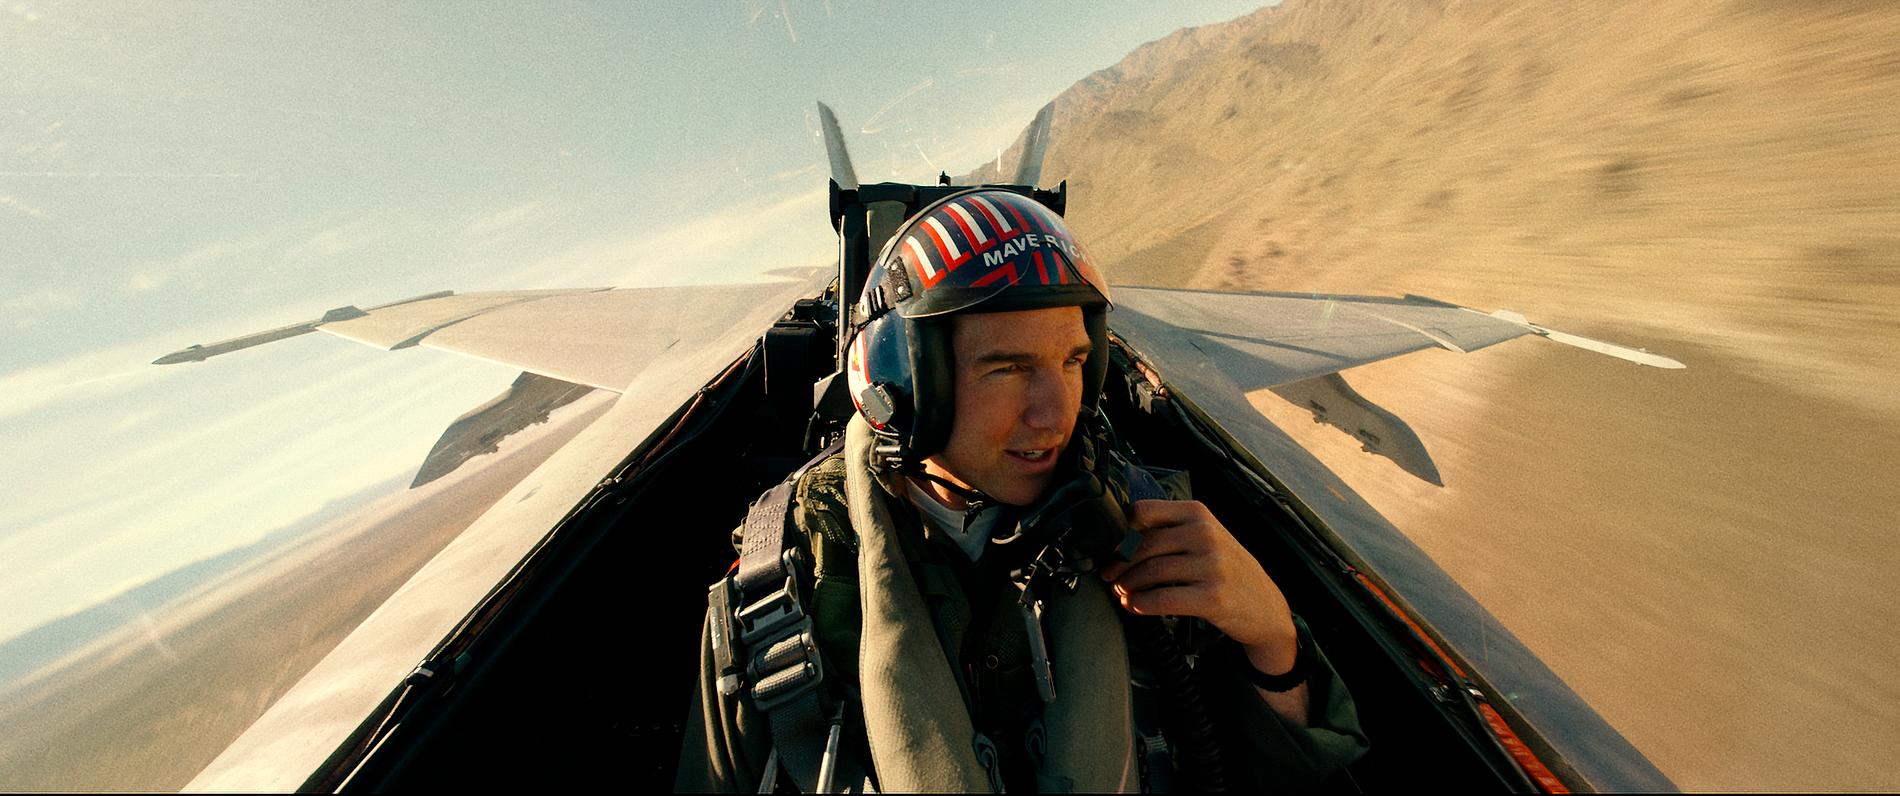 Tom Cruise i rollen som Pete "Maverick" Mitchell i uppföljaren "Top gun: Maverick". Pressbild.